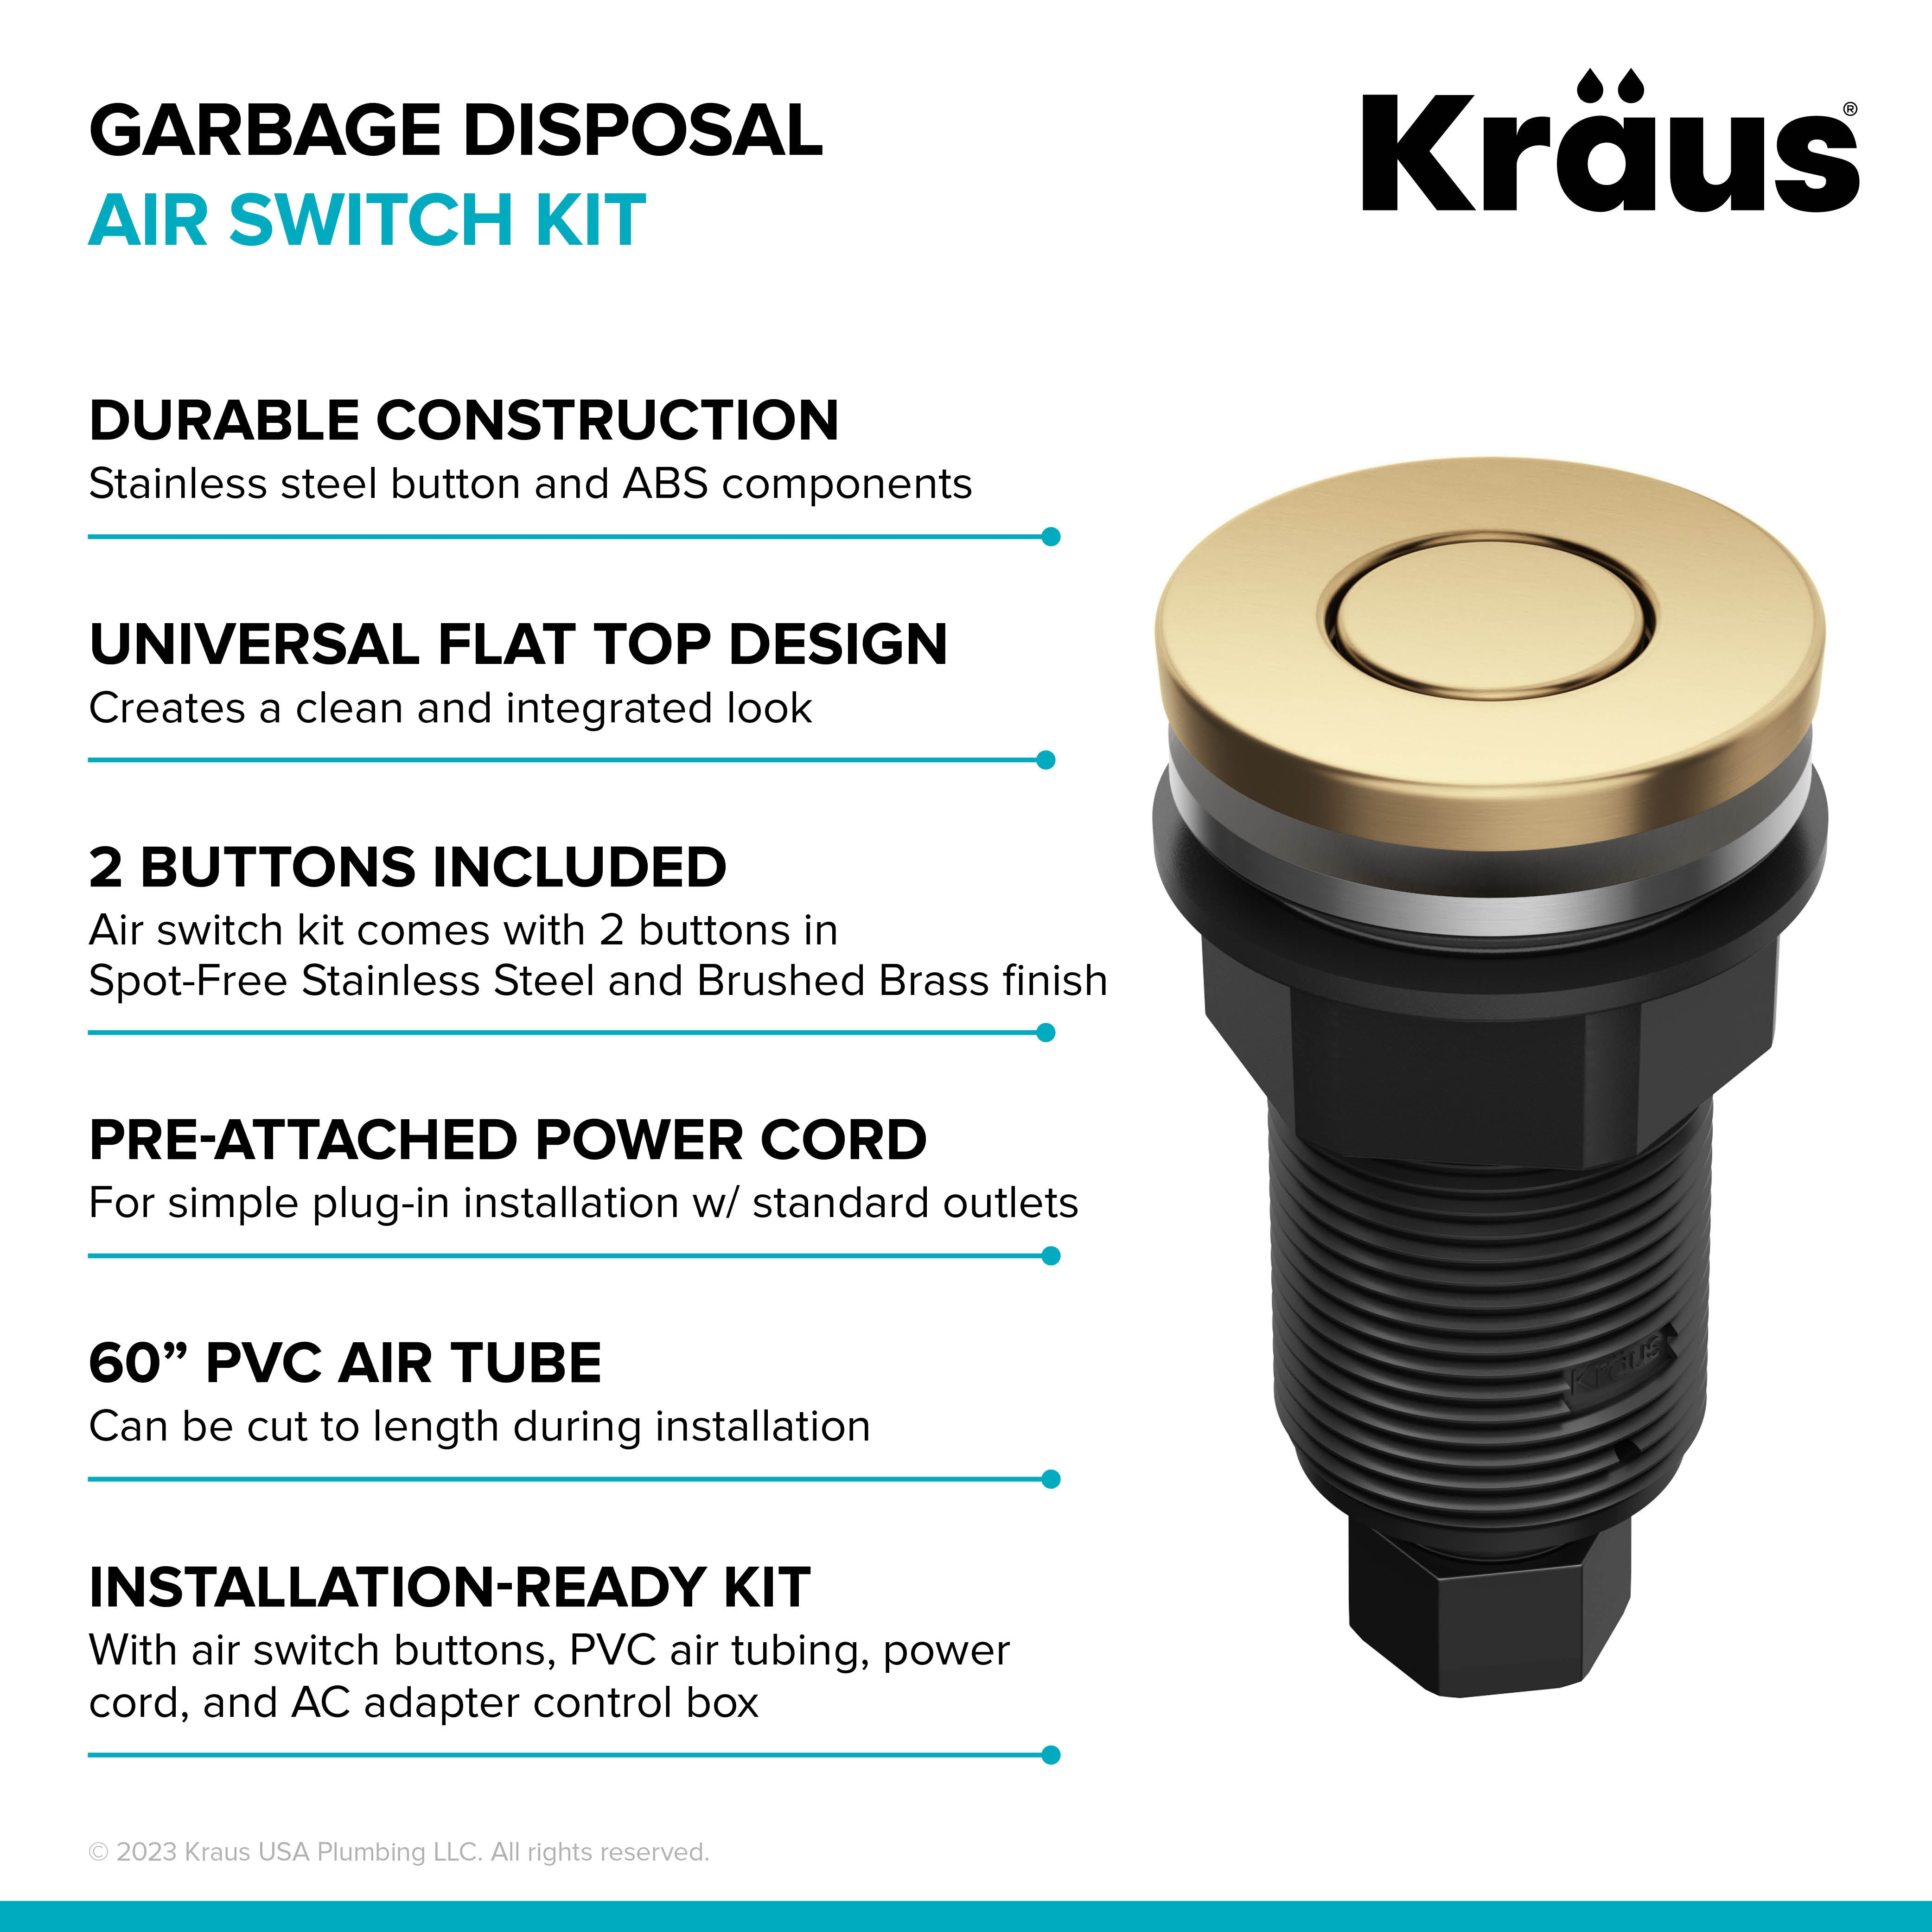 KRAUS Contemporary Flat Top Button Garbage Disposal Air Switch Kit in Brushed Brass